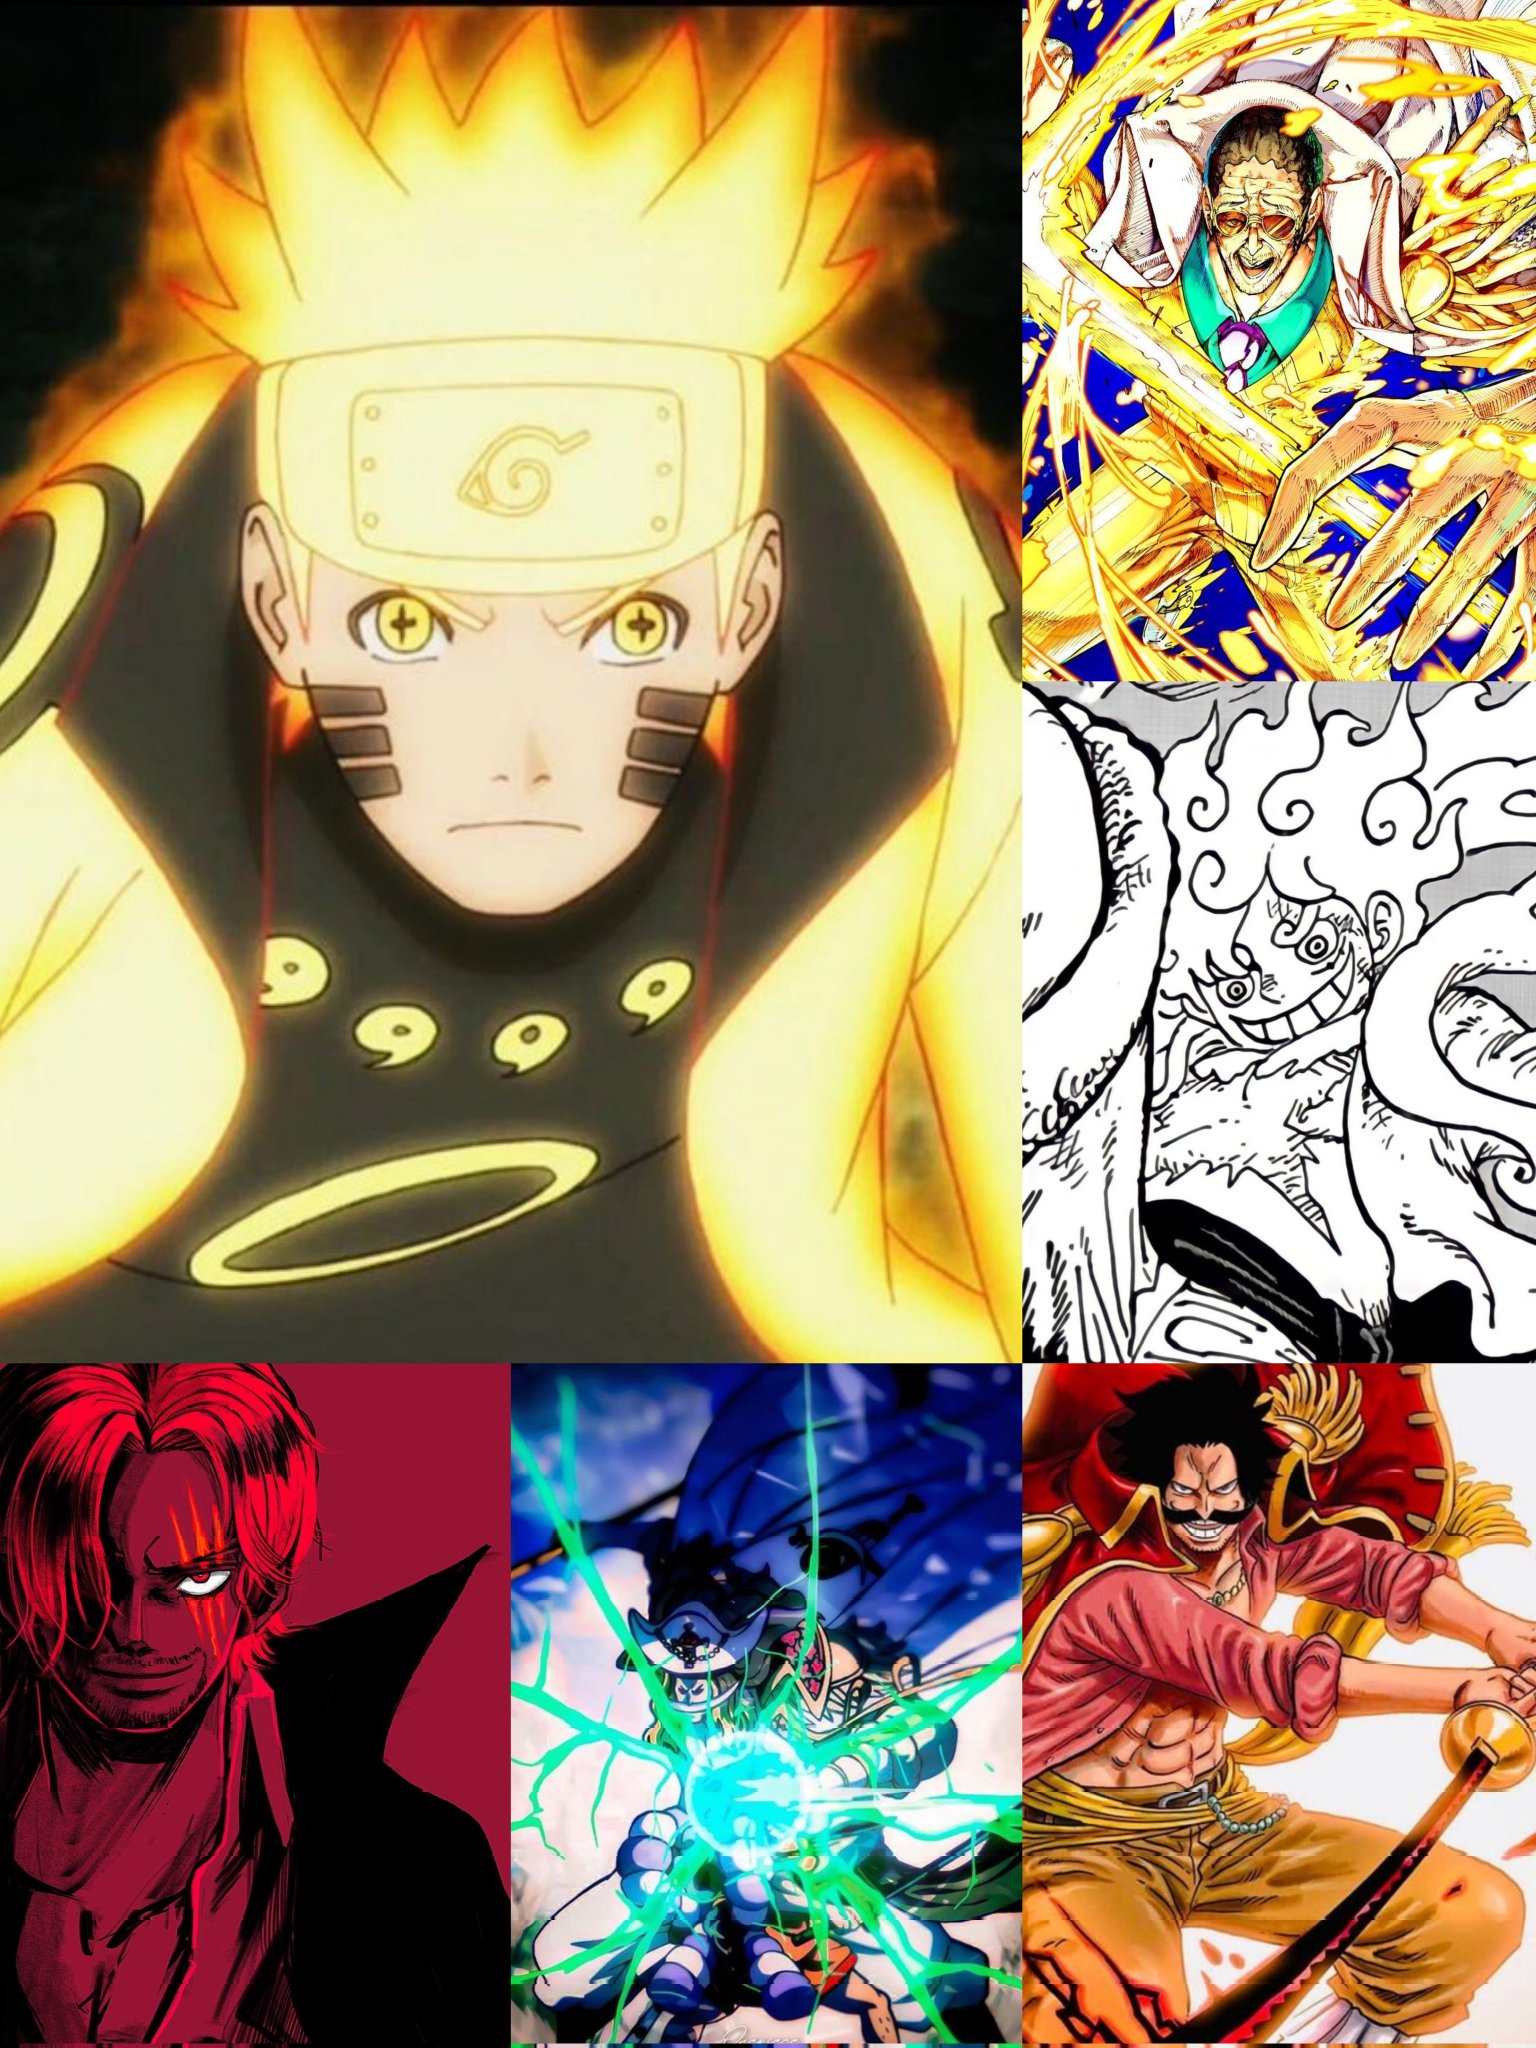 Naruto and Sasuke(Classic) run a One Piece villains gauntlet